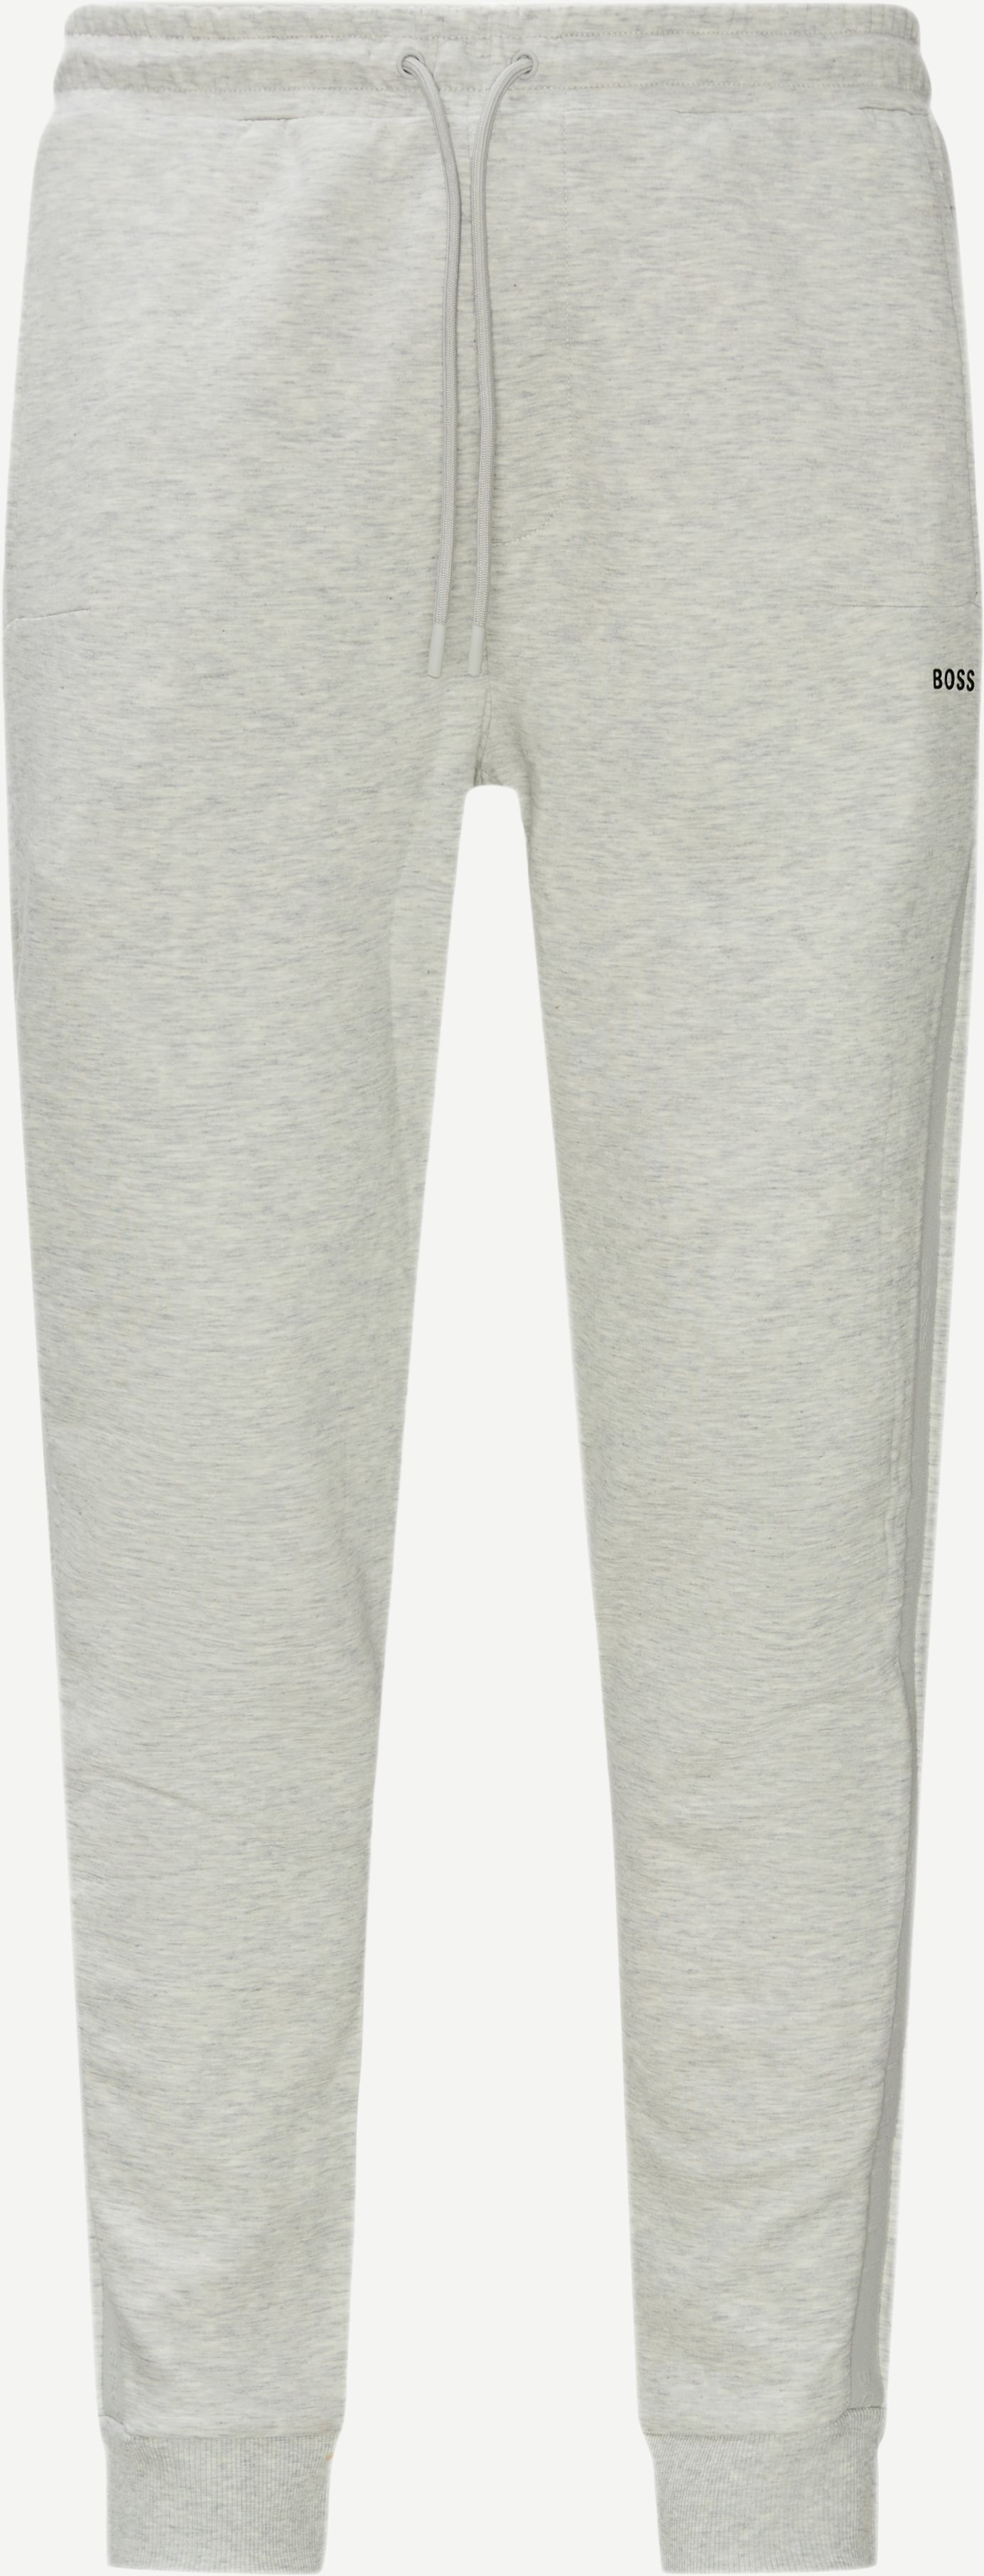 Trousers - Regular fit - Grey